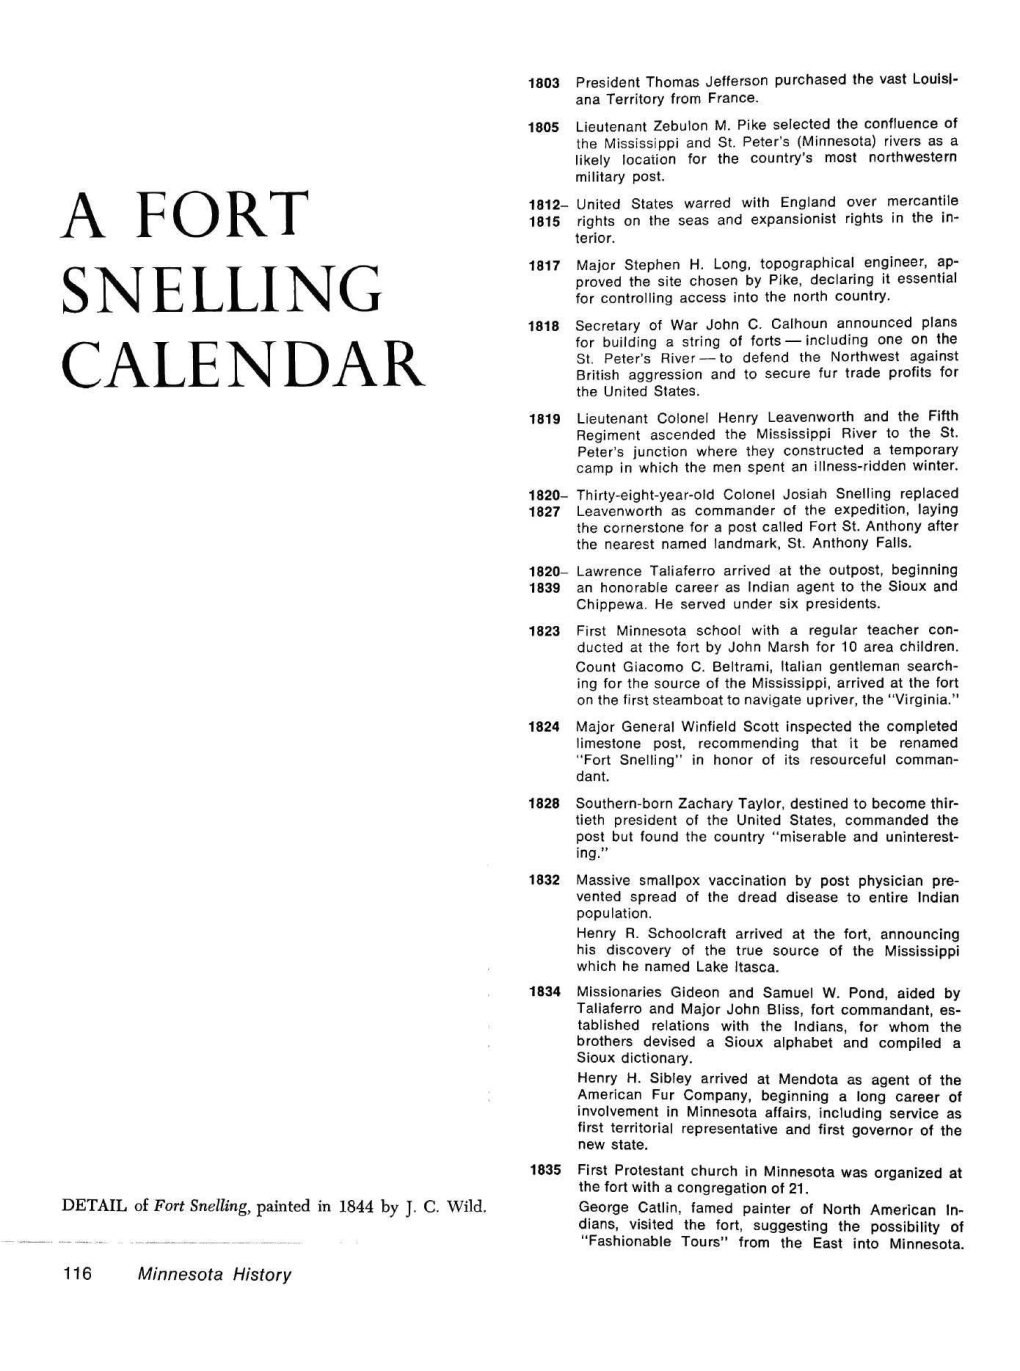 A Fort Snelling Calendar